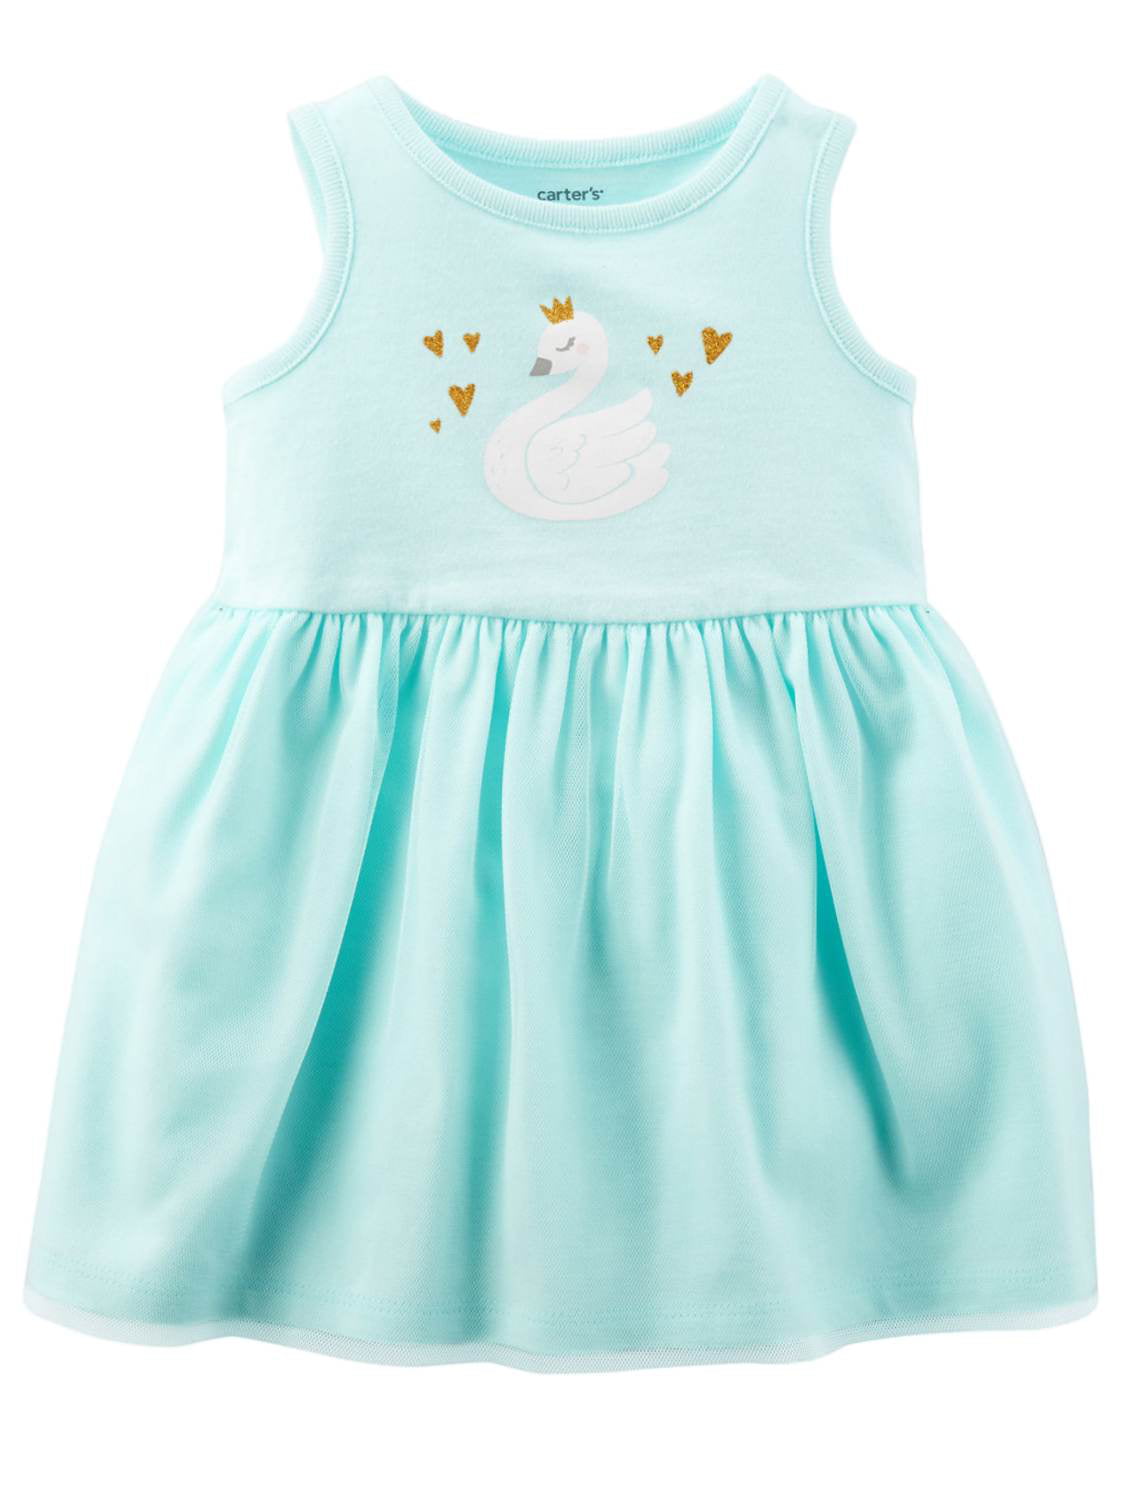 WOCACHI Toddler Baby Girl Dresses 3PCS Toddler Baby Girls Cartoon Swan Princess Dress+Headbands+Shoes Set Outfit 